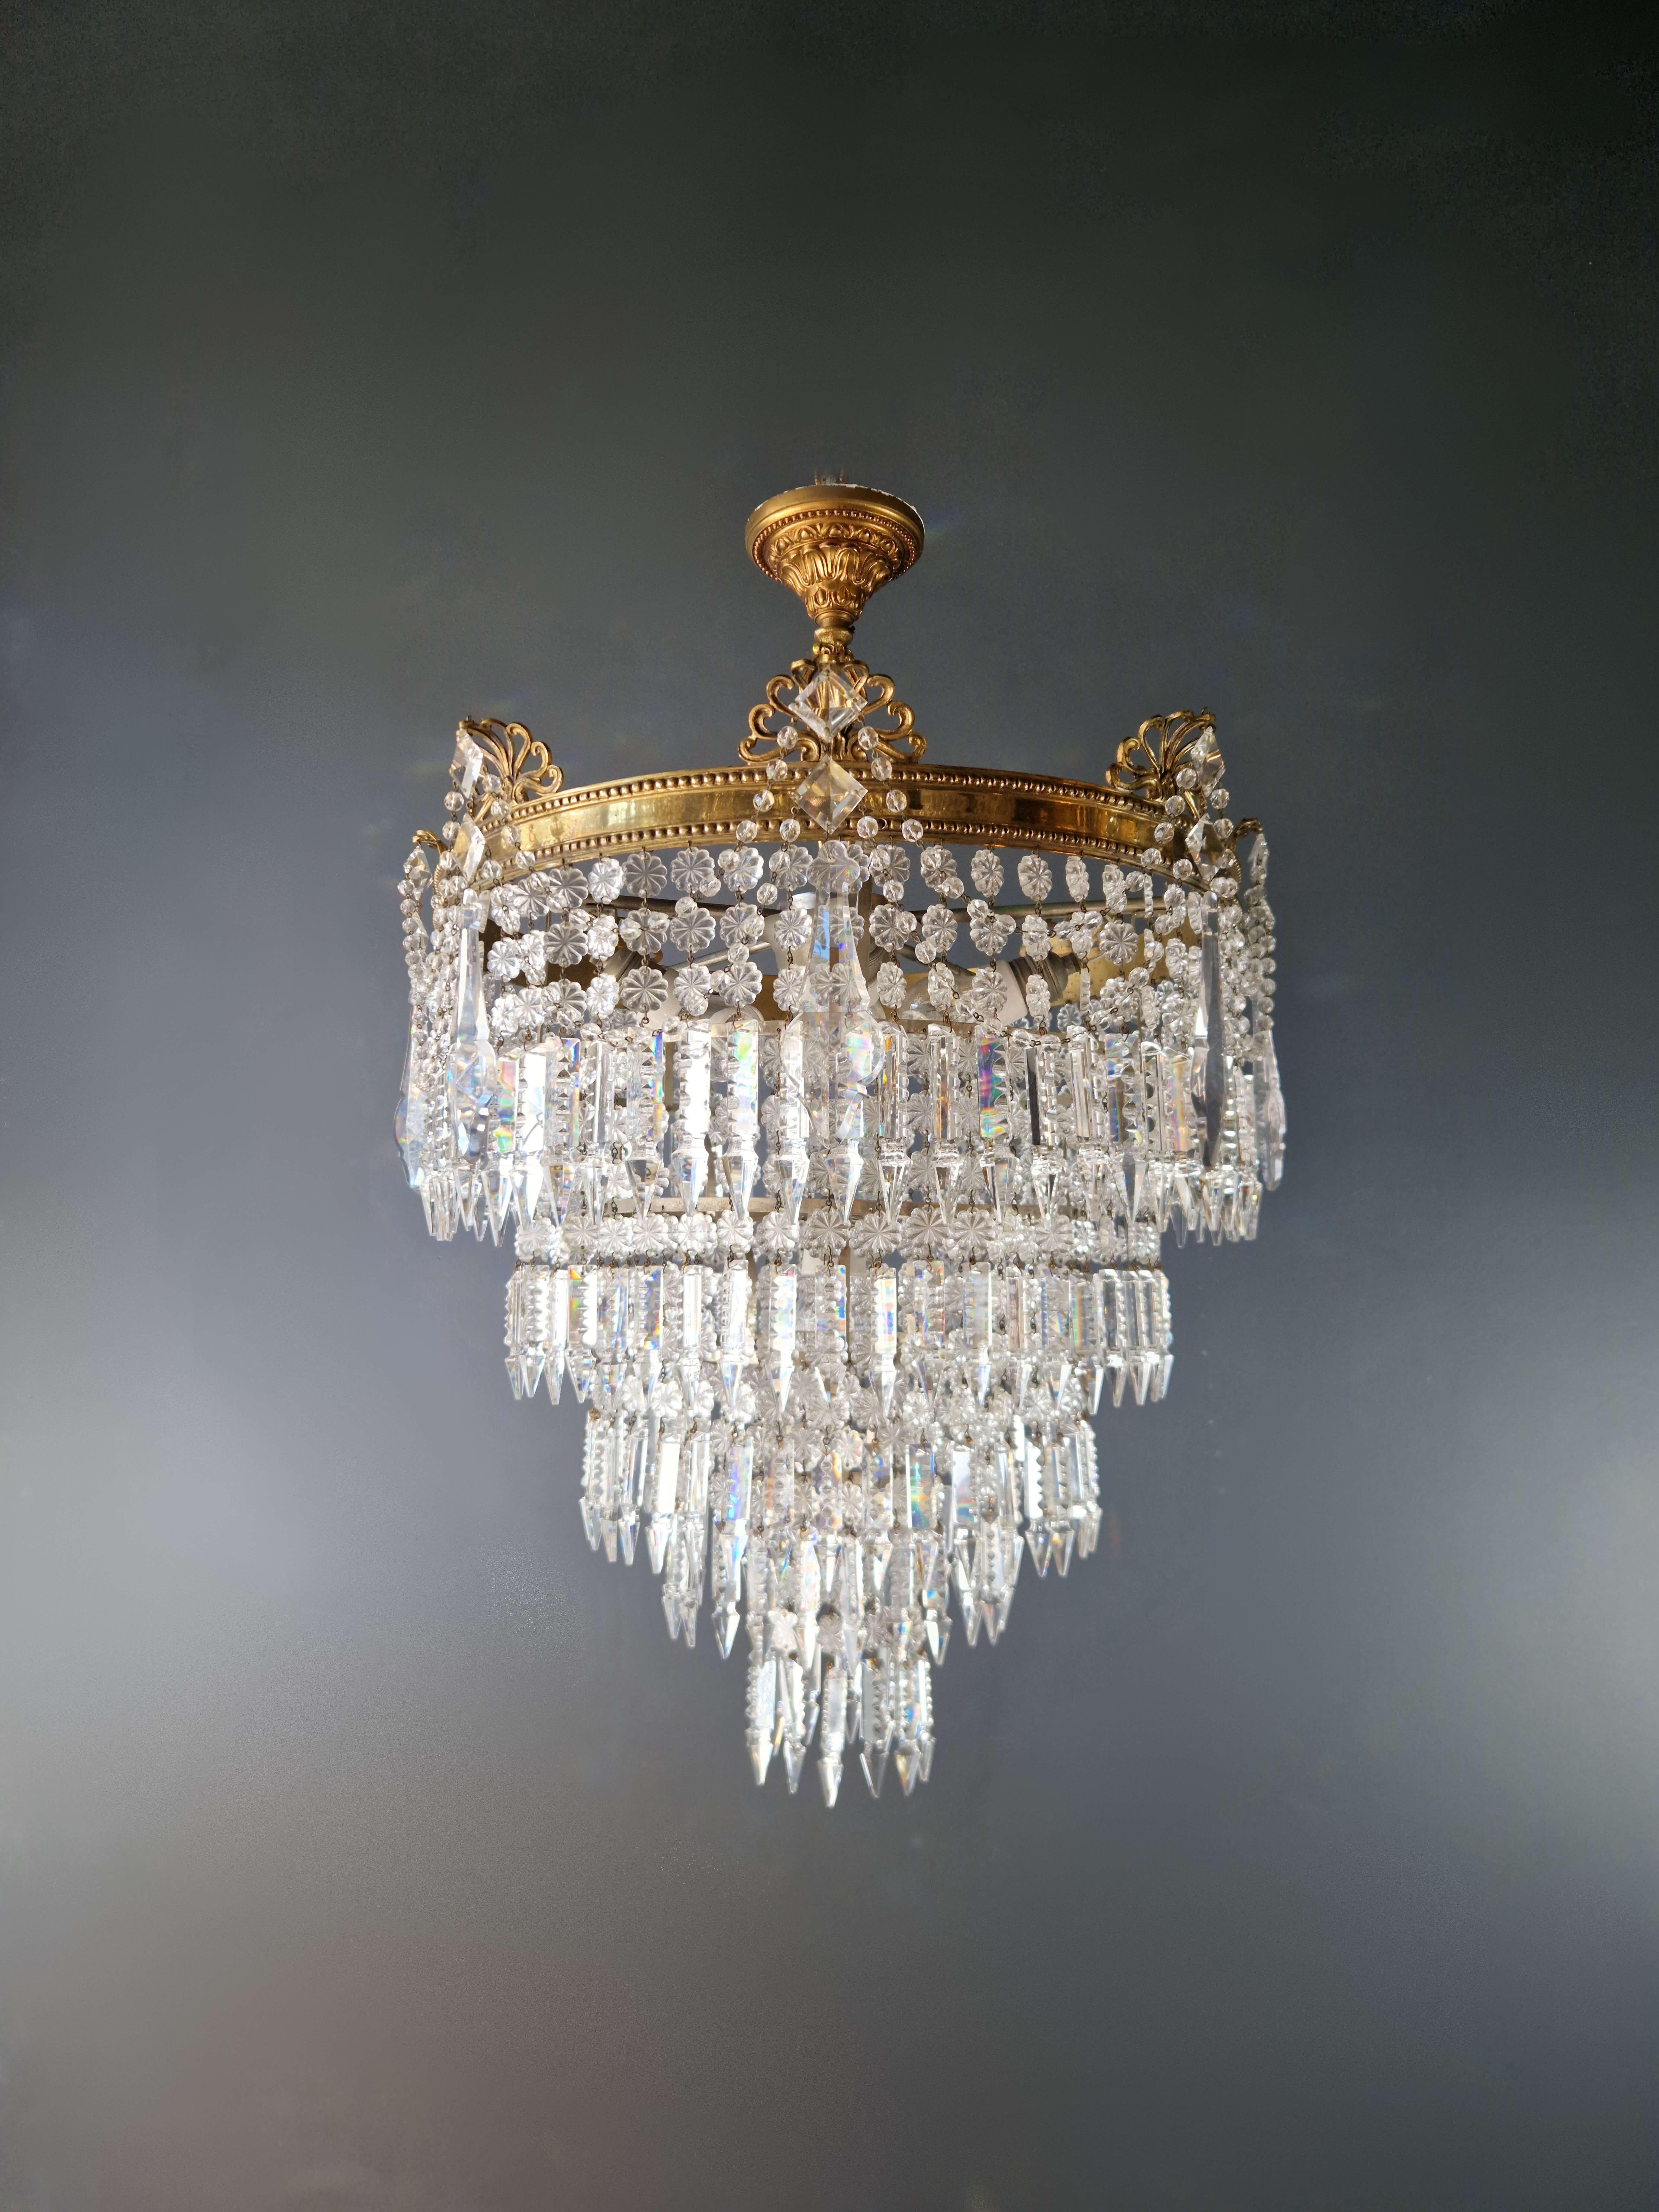 Art Deco Low Plafonnier Brass Crystal Chandelier Lustre Ceiling Lamp Antique In Good Condition For Sale In Berlin, DE